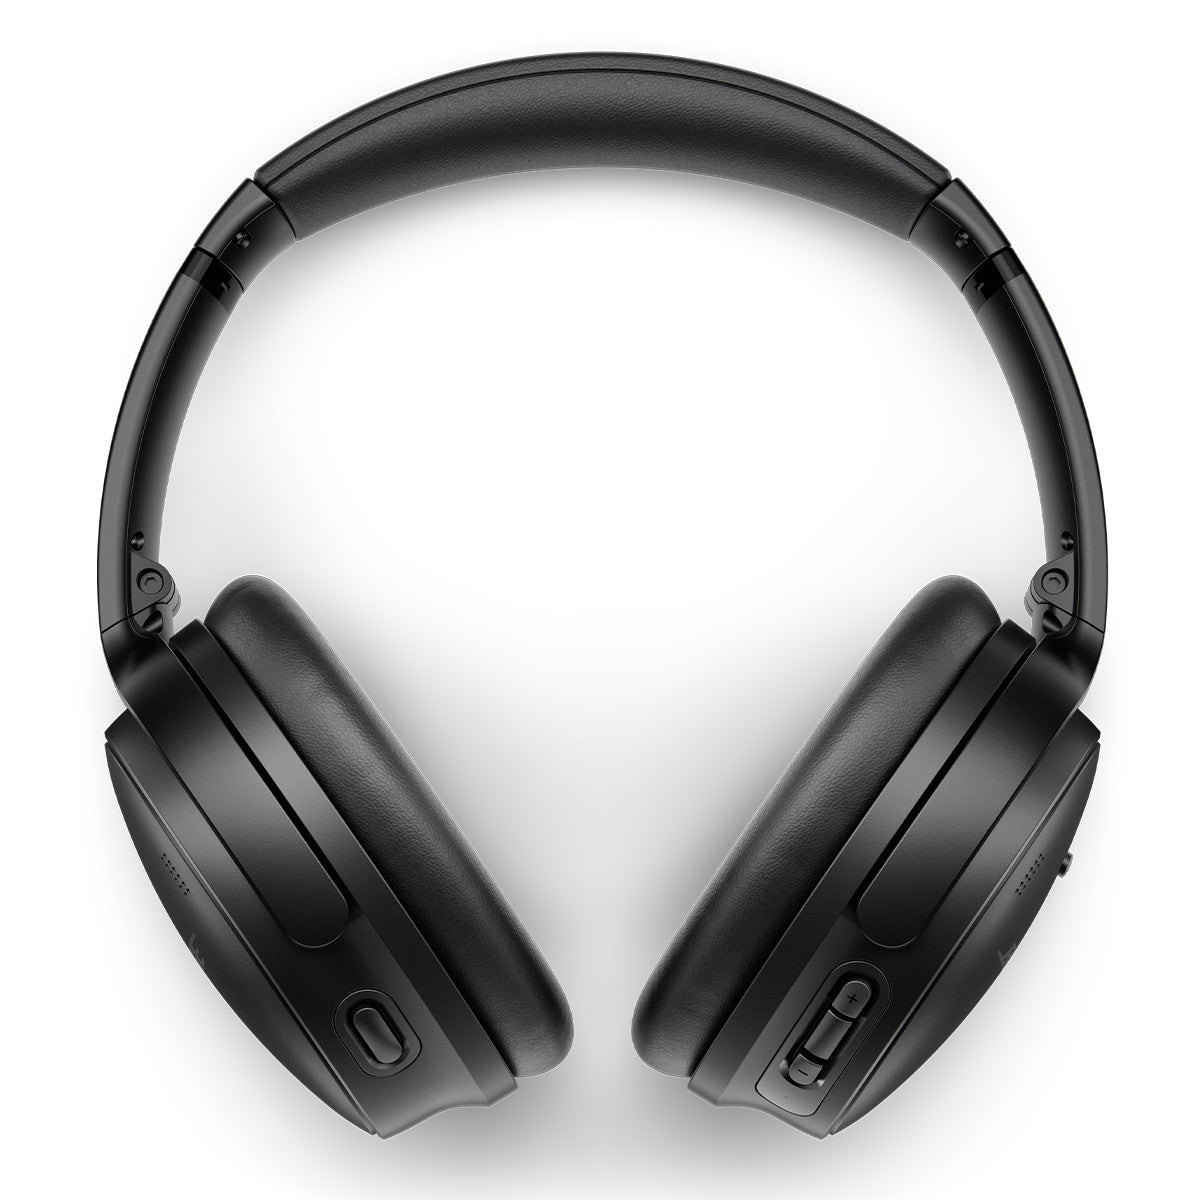 Bose QuietComfort Headphones with Active Noise Cancellation - Pair (Black)